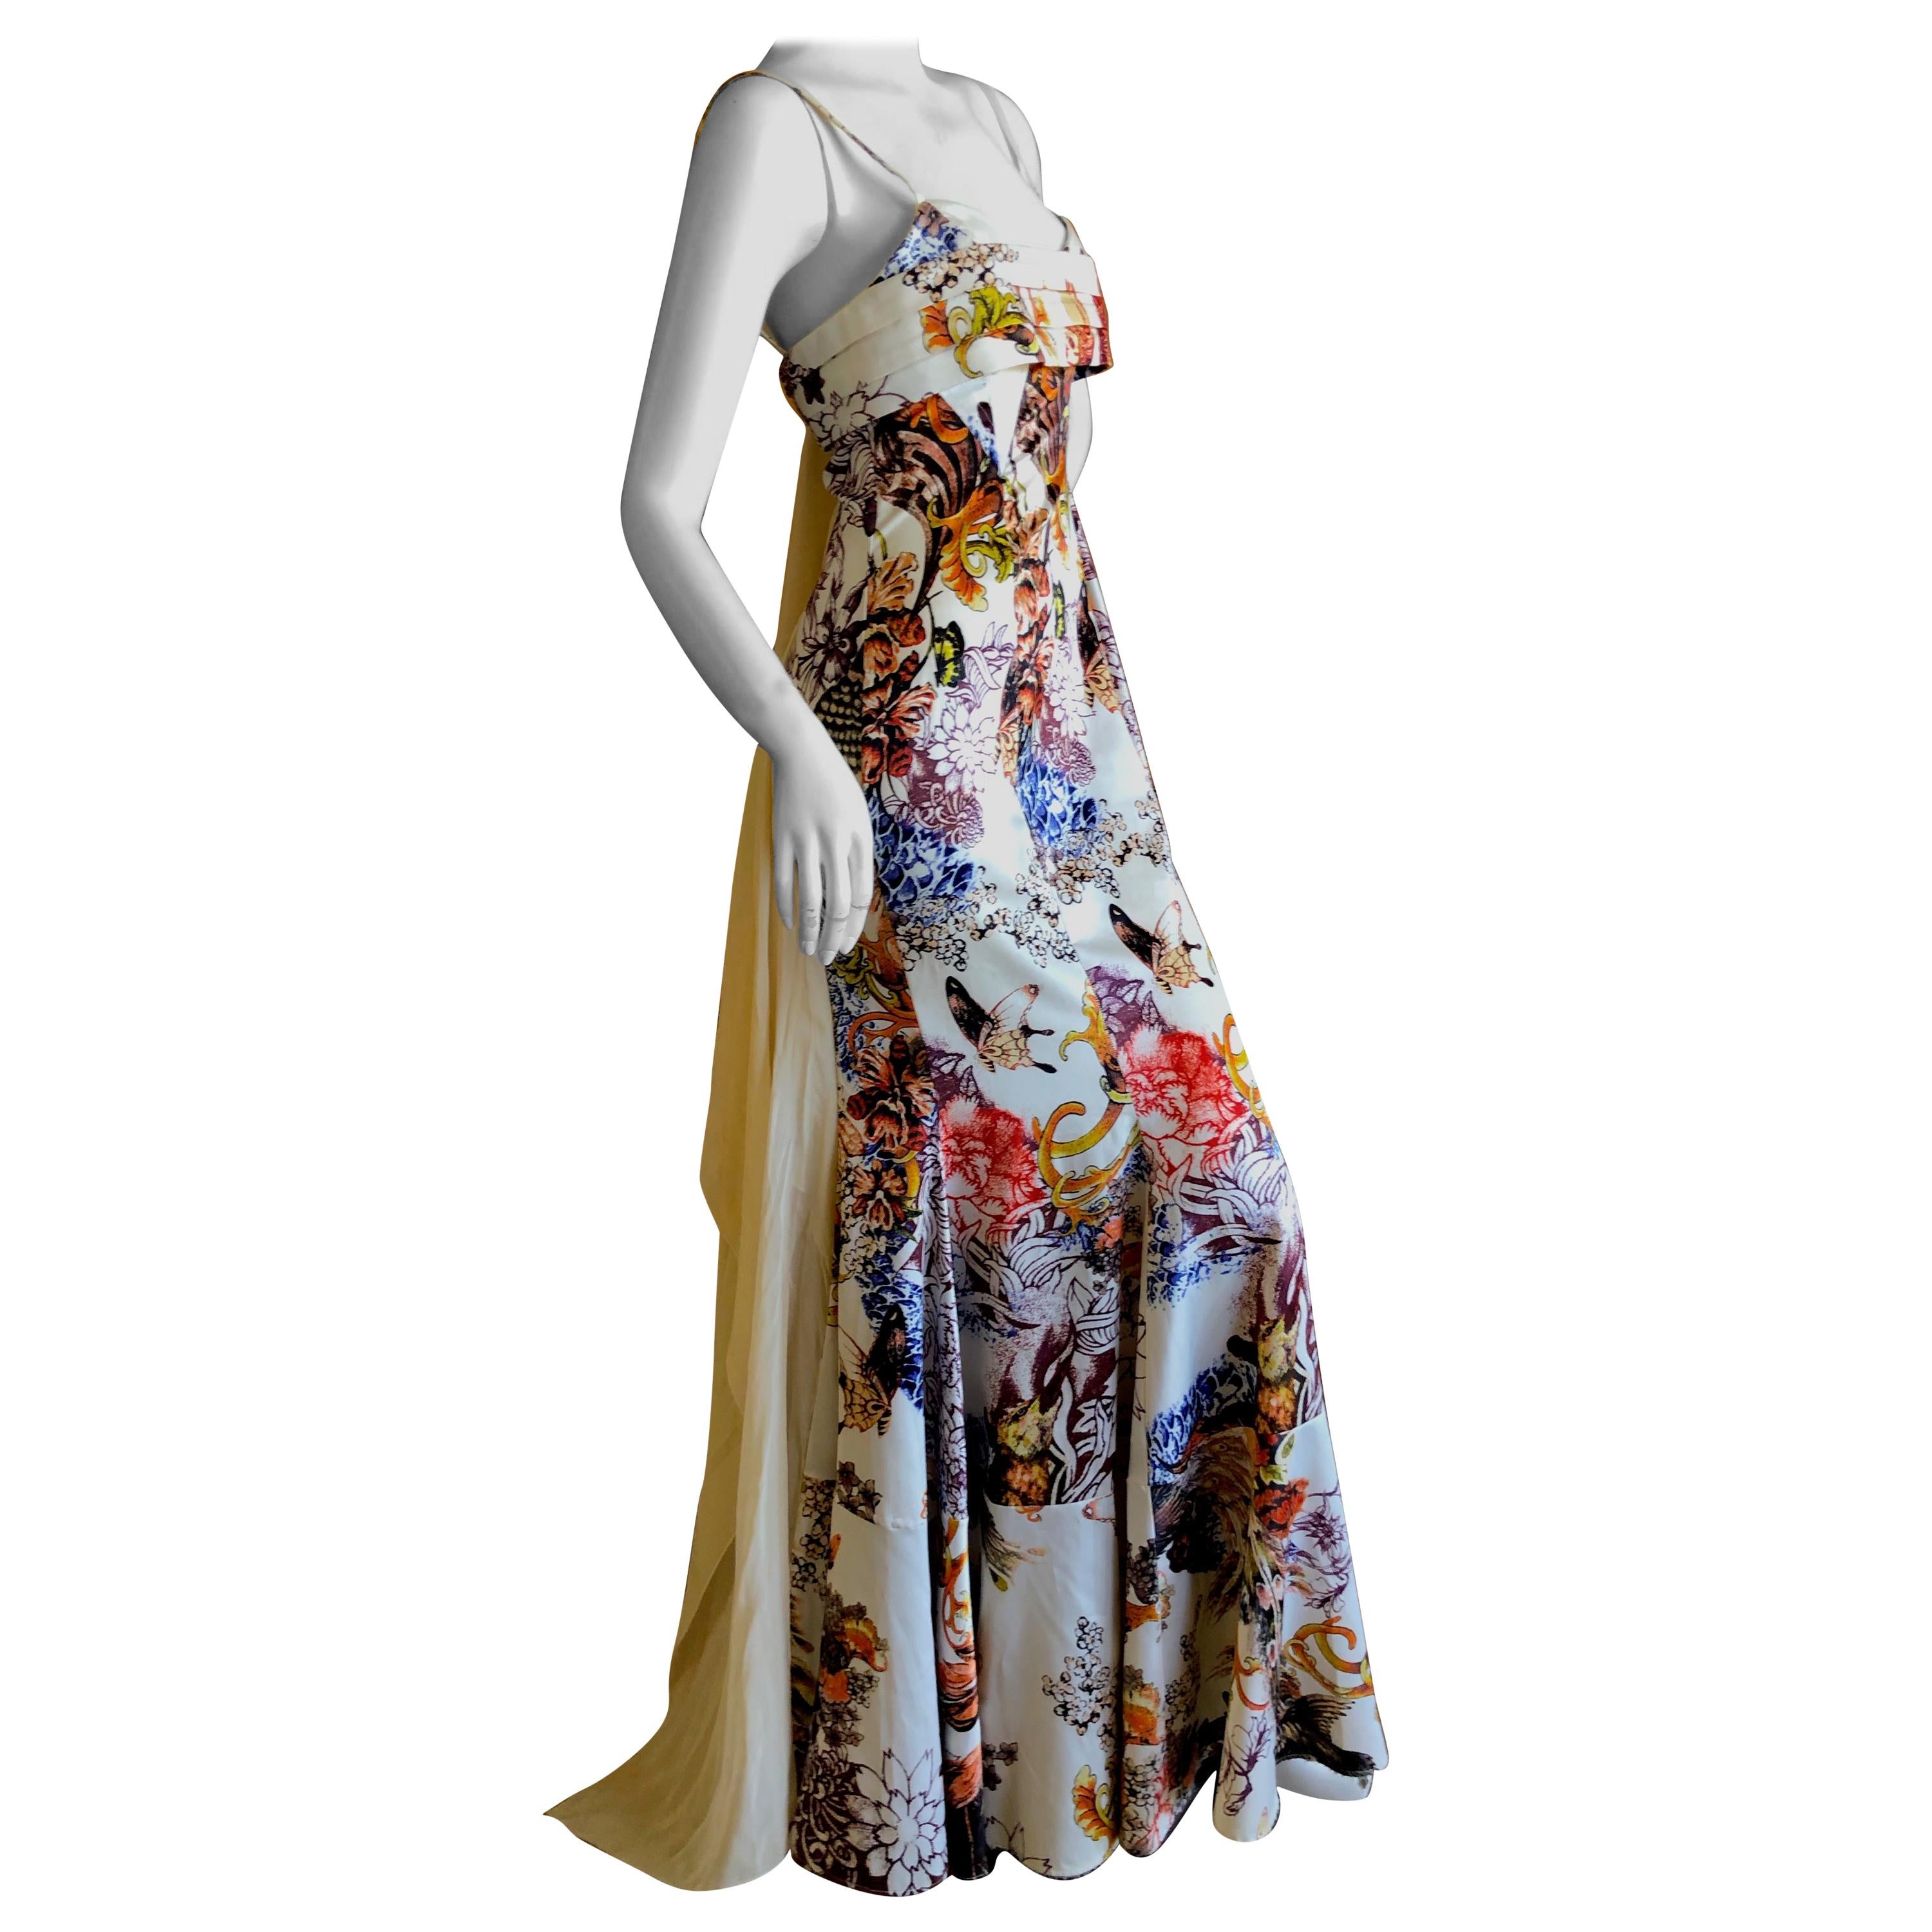 Roberto Cavalli for Just Cavalli  Vintage Floral Evening Dress
Size 42
Bust 35